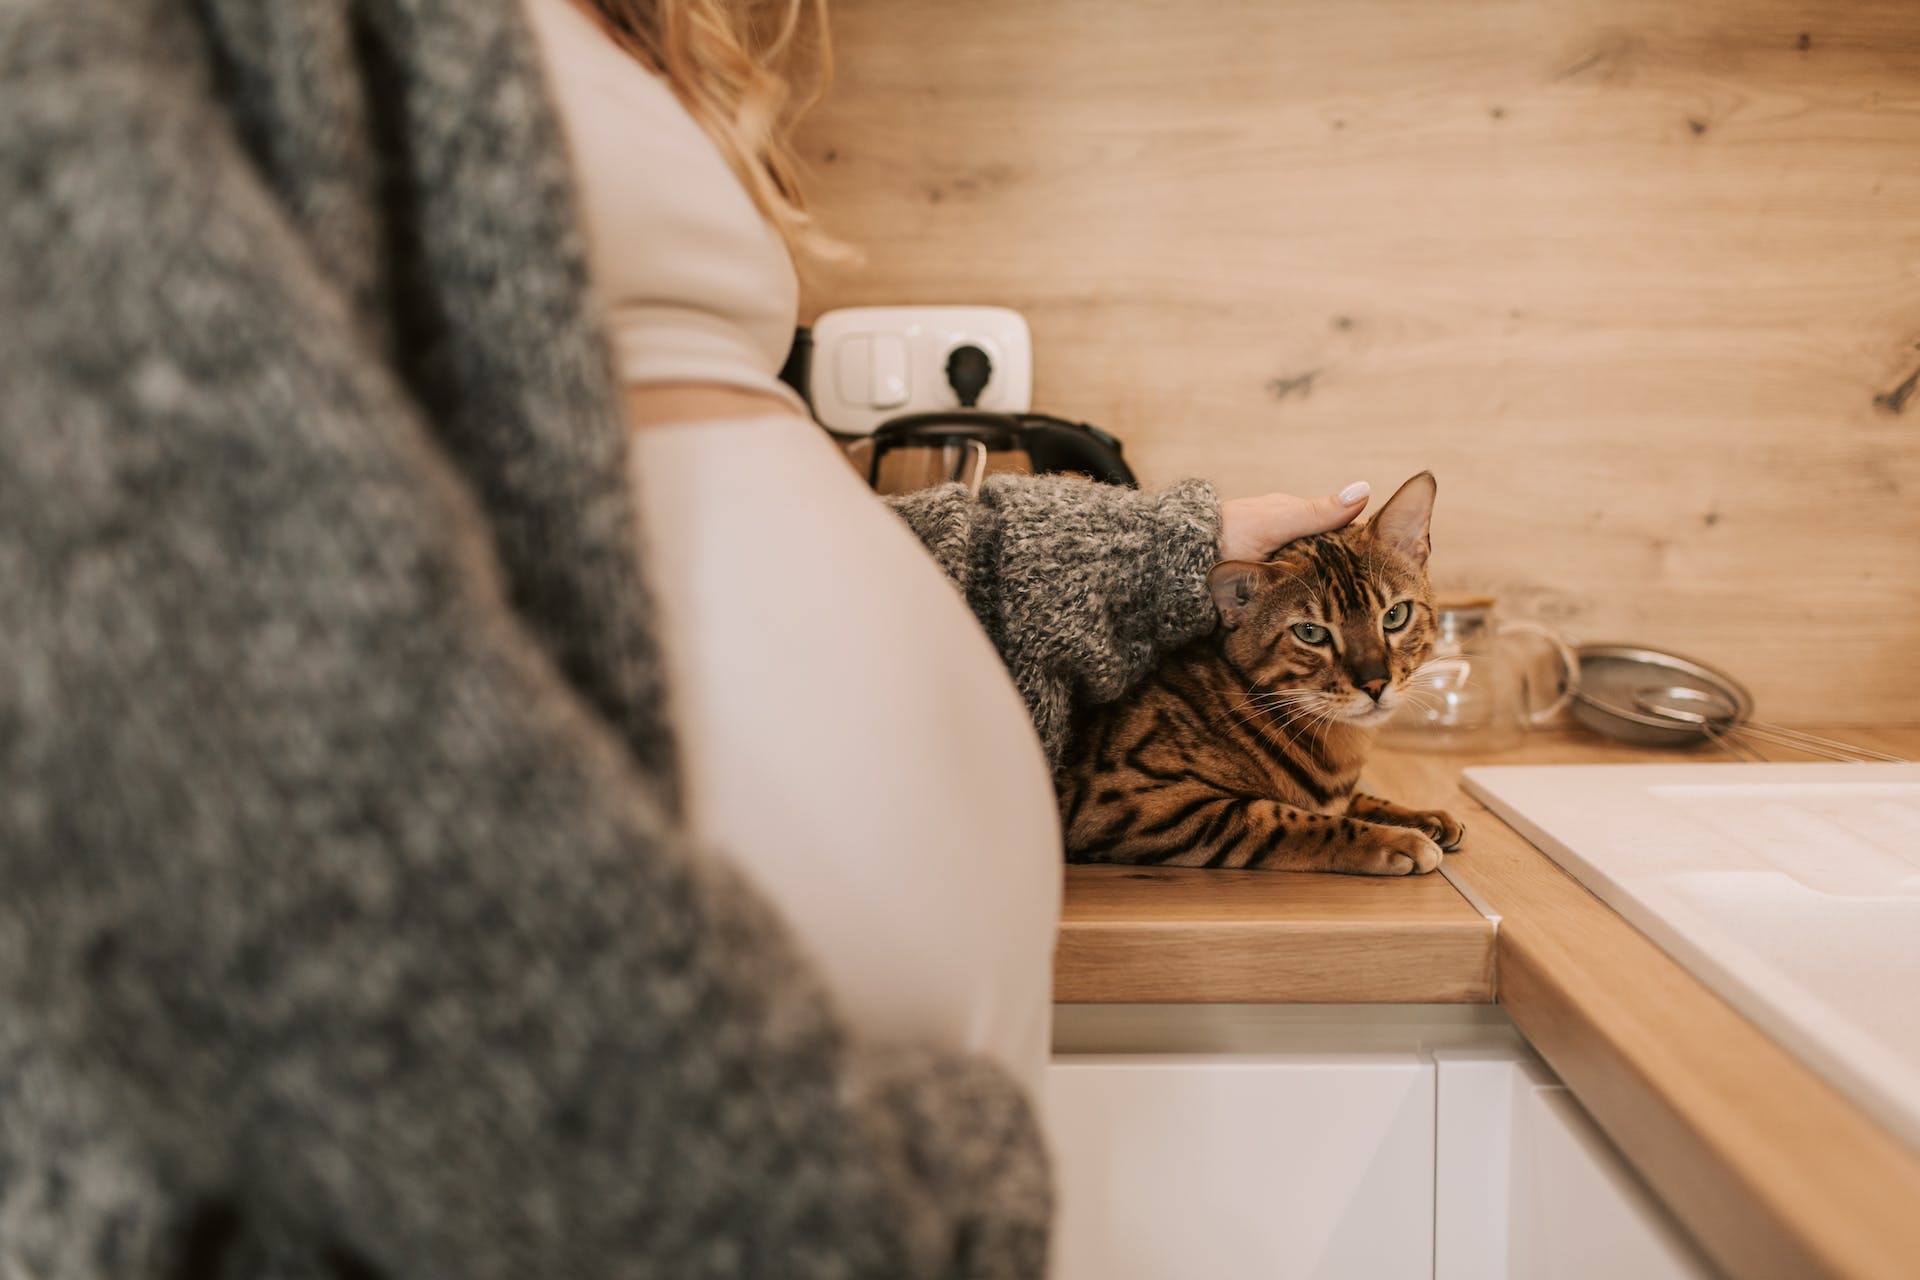 A pregnant woman petting a cat indoors